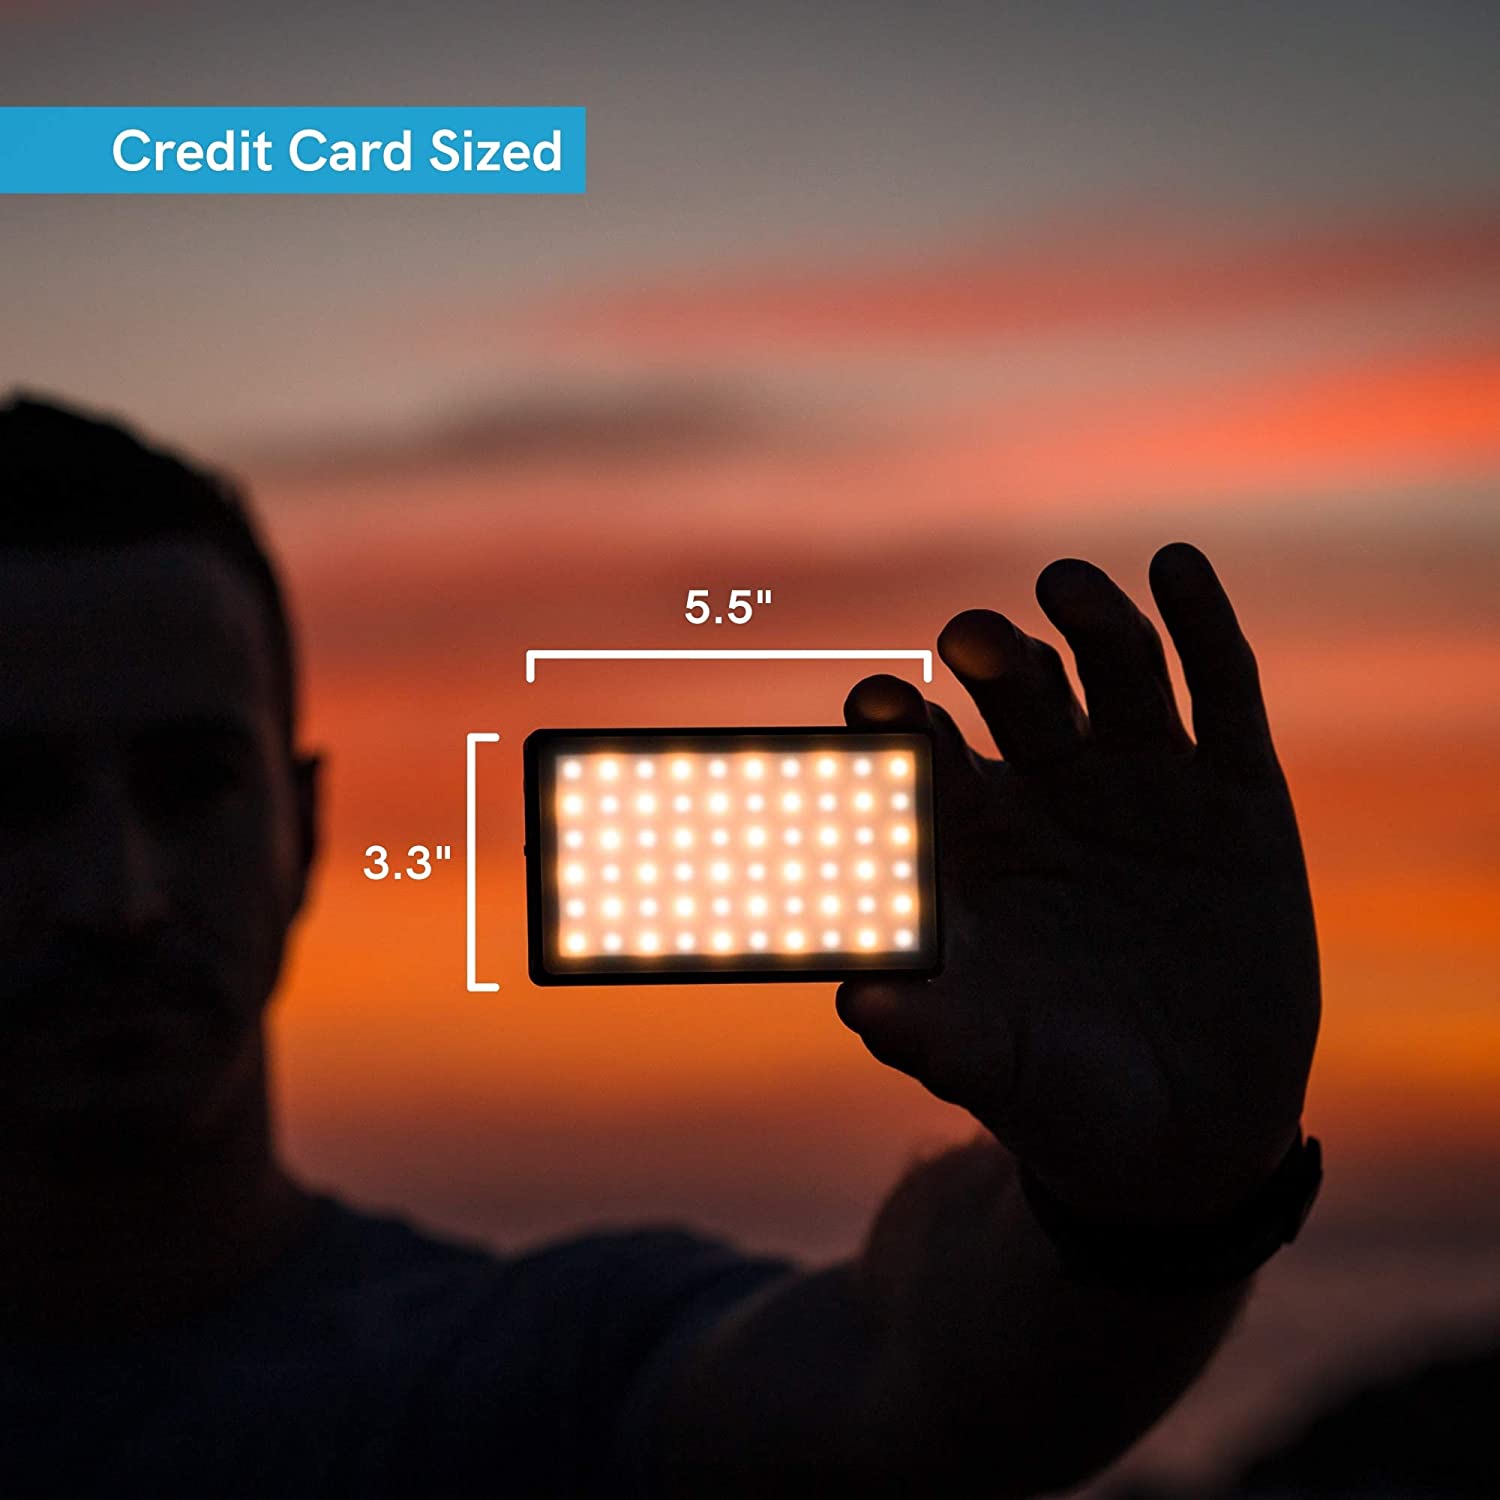  Lume Cube Bicolor Panel Mini LED Light for Professional DSLR  Cameras, Adjustable Panel Mini, LCD Display, Photo and Video Lighting,  Long Battery Life